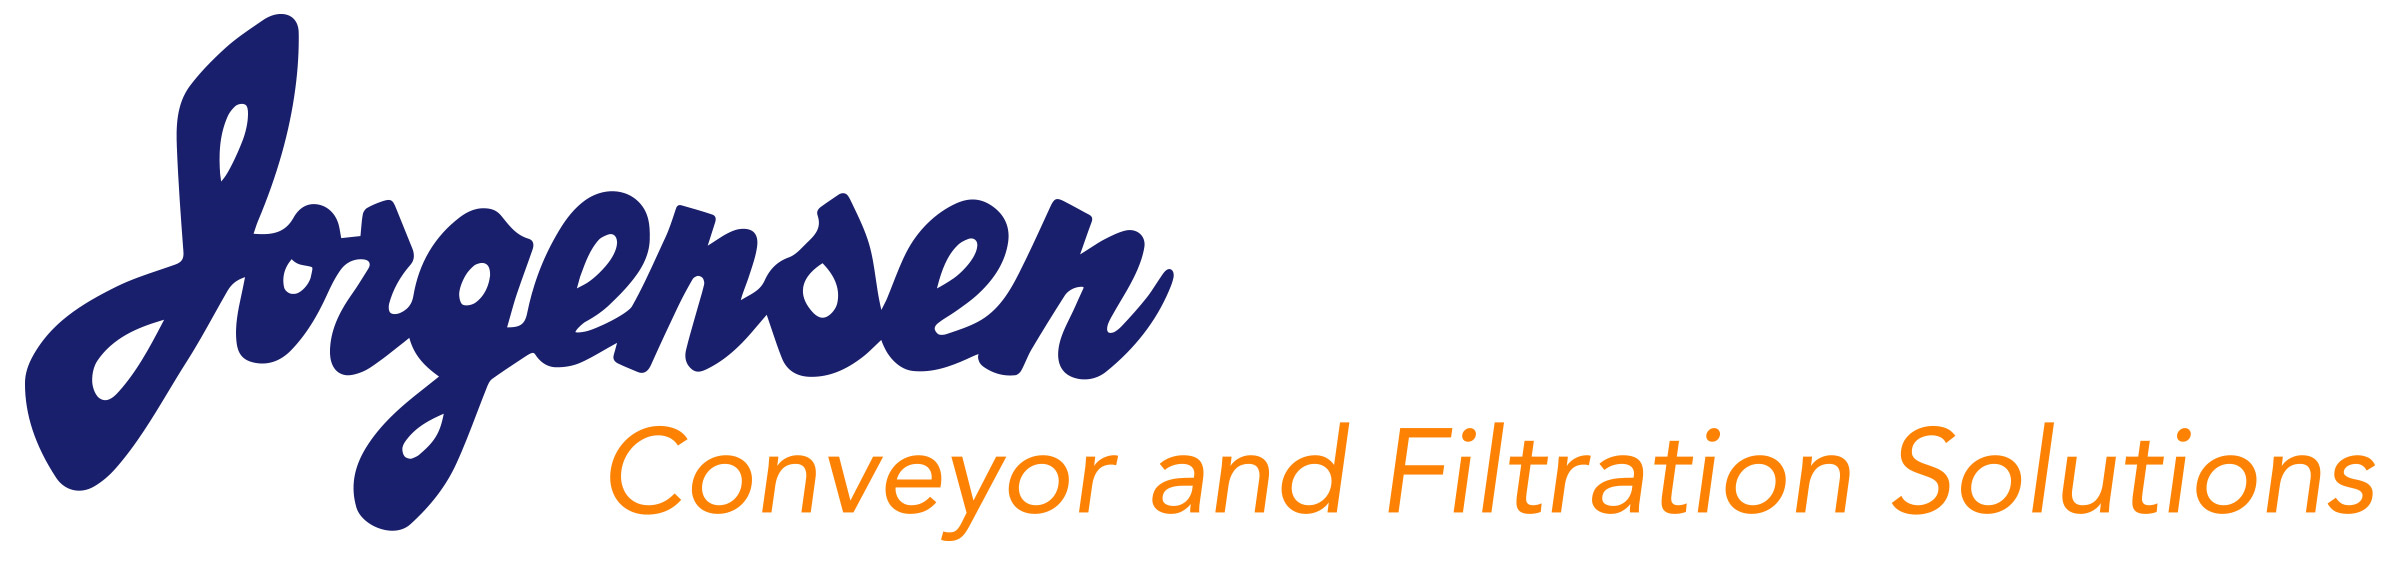 Jorgensen Conveyors, Inc. logo